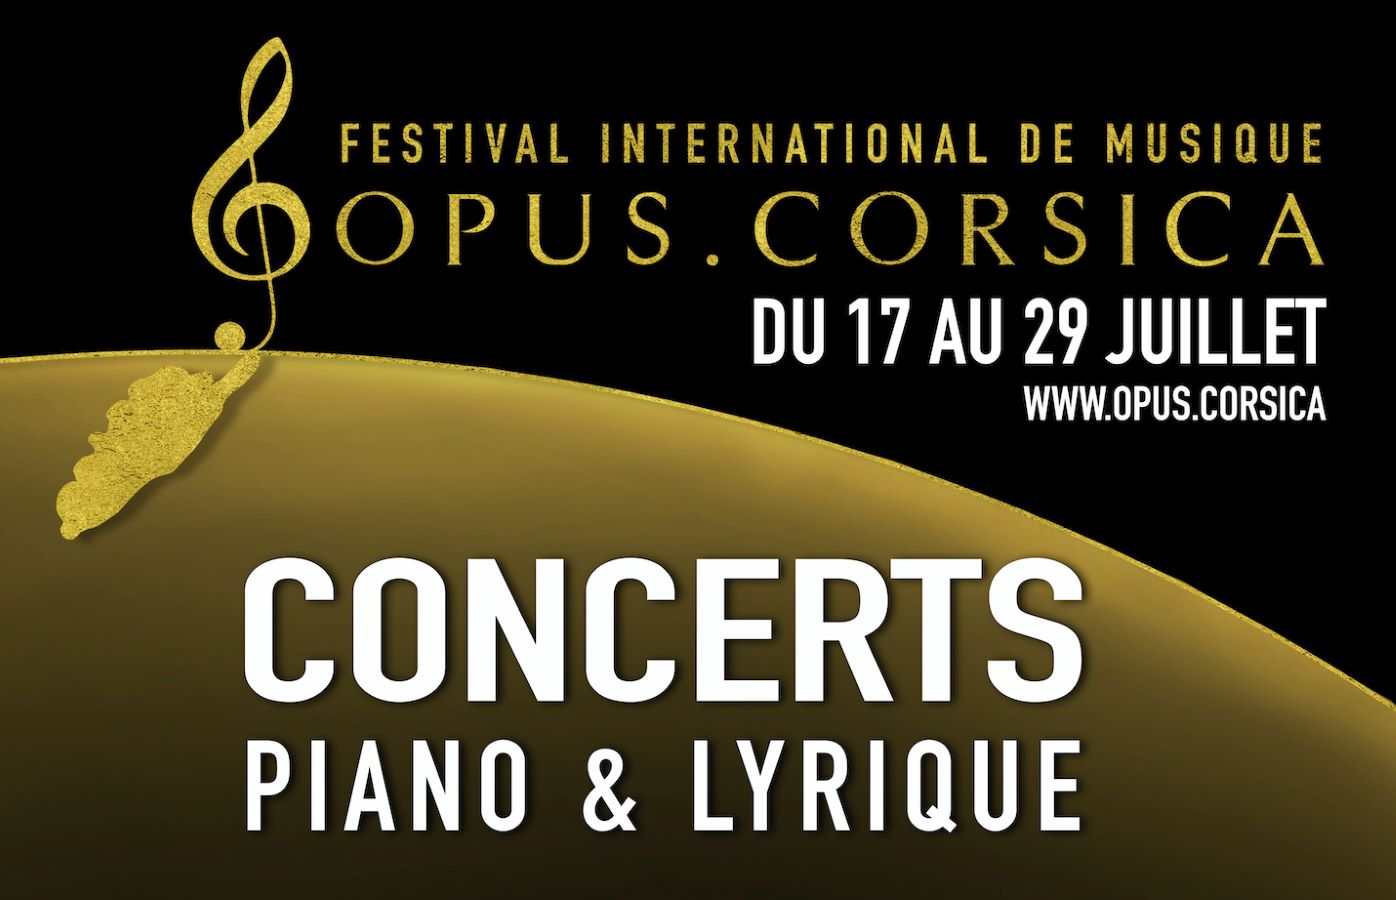 Festival International de musique Opus Corsica